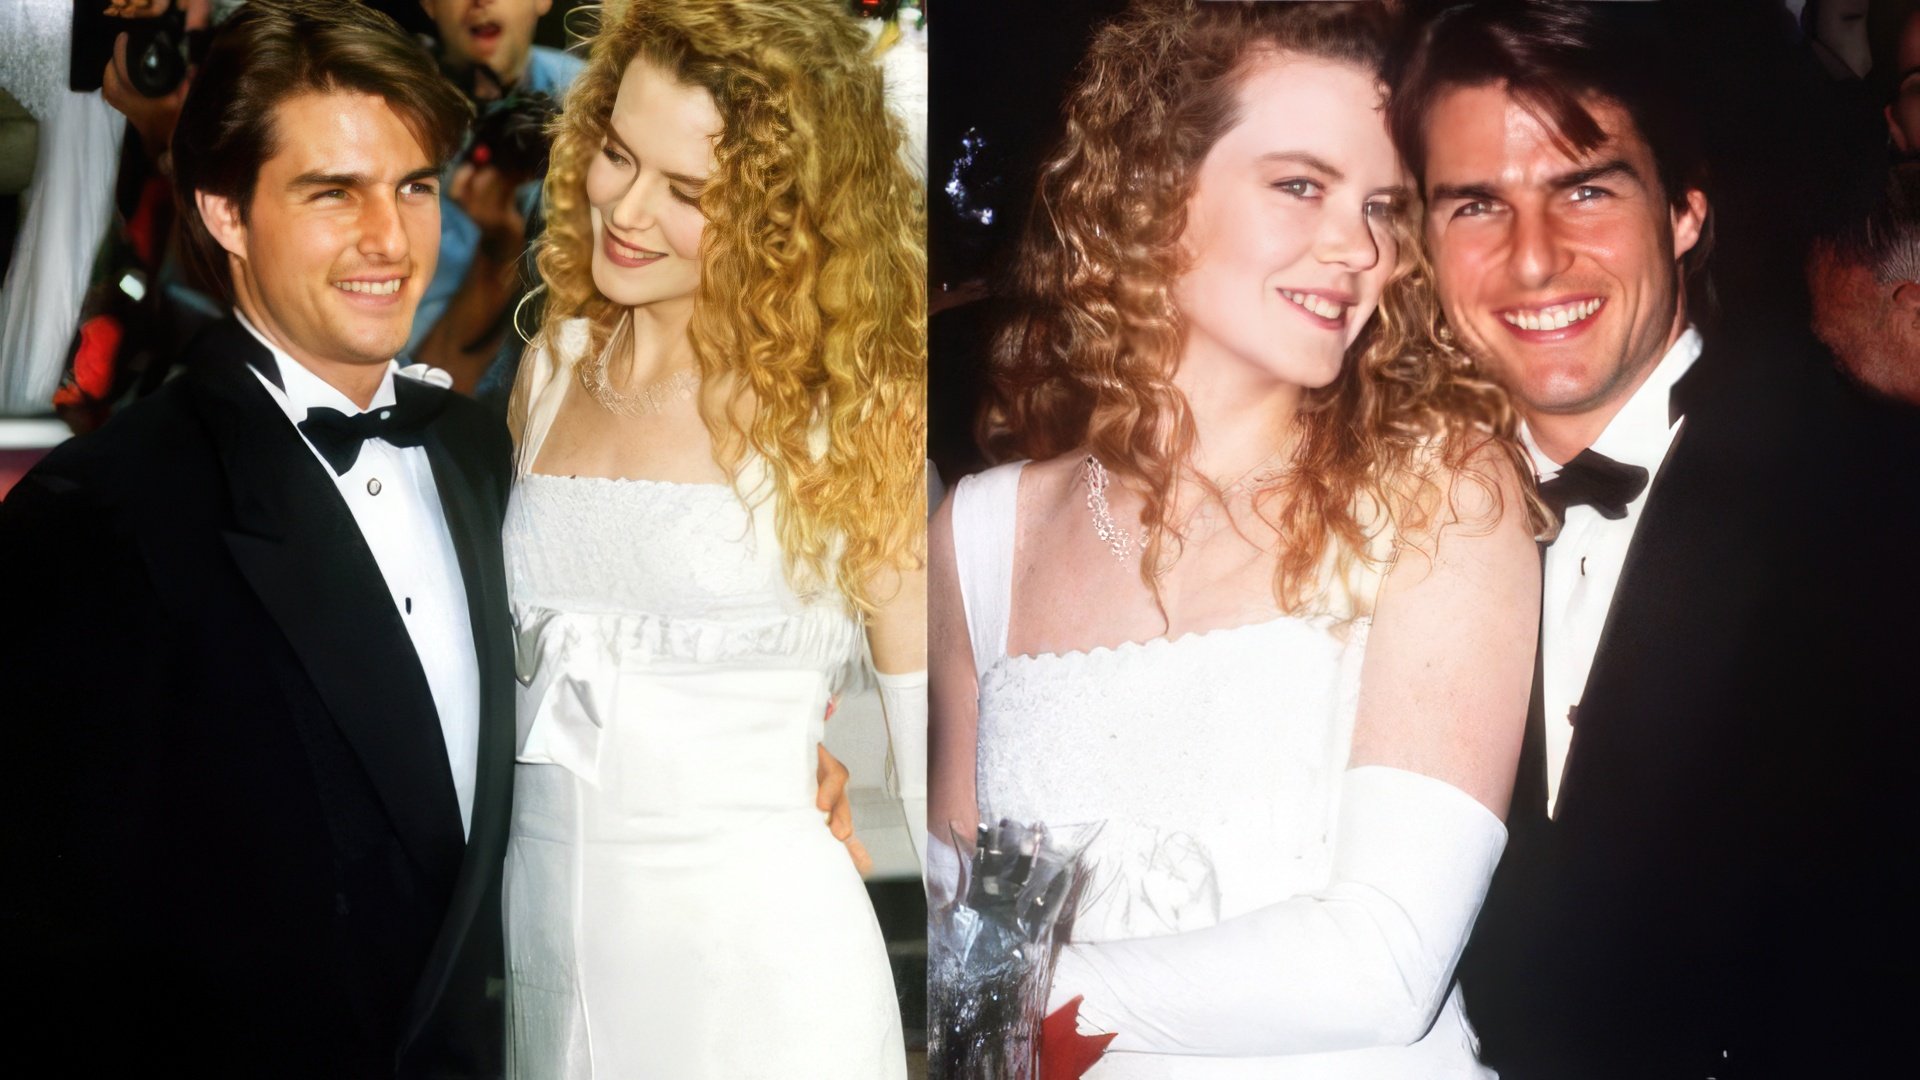 Tom Cruise and Nicole Kidman’s wedding